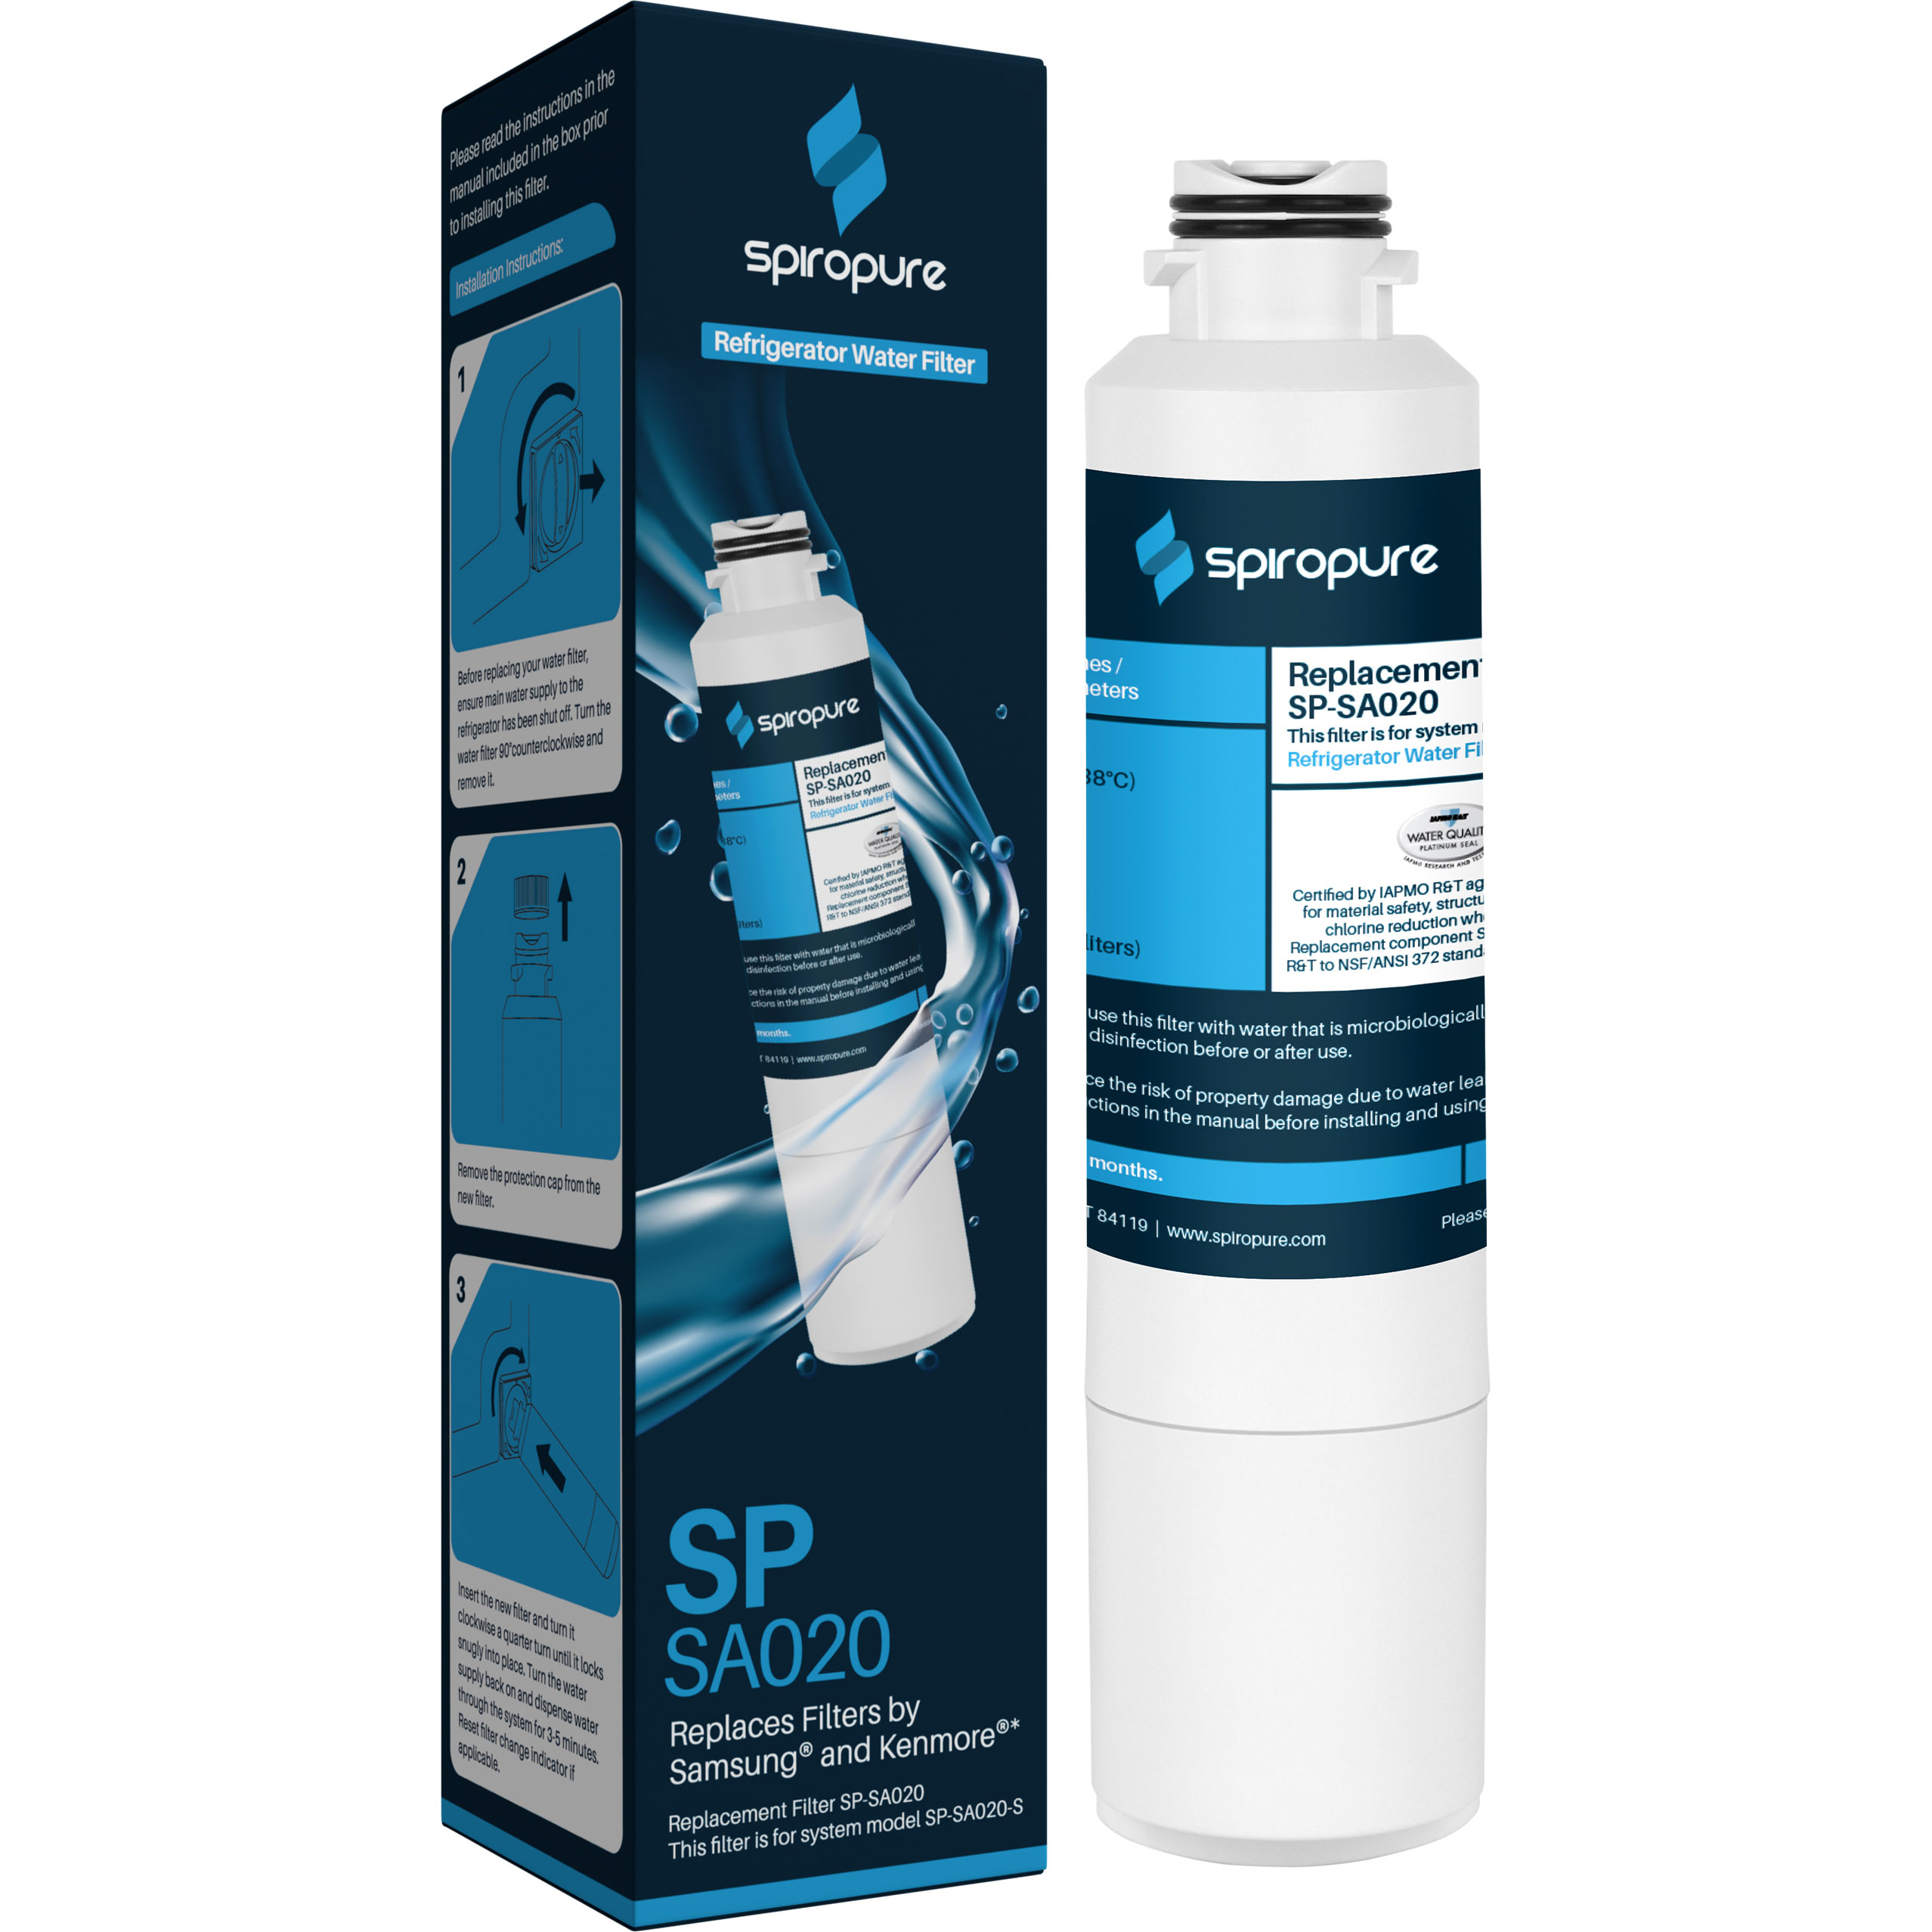 SpiroPure SP-SA020 NSF Certified Refrigerator Water Filter Replacement for Da29-00020b, Haf-cin, HAF-CIN-EXP, 9101, DA29-00020A/B, Da29-00020a, Da97